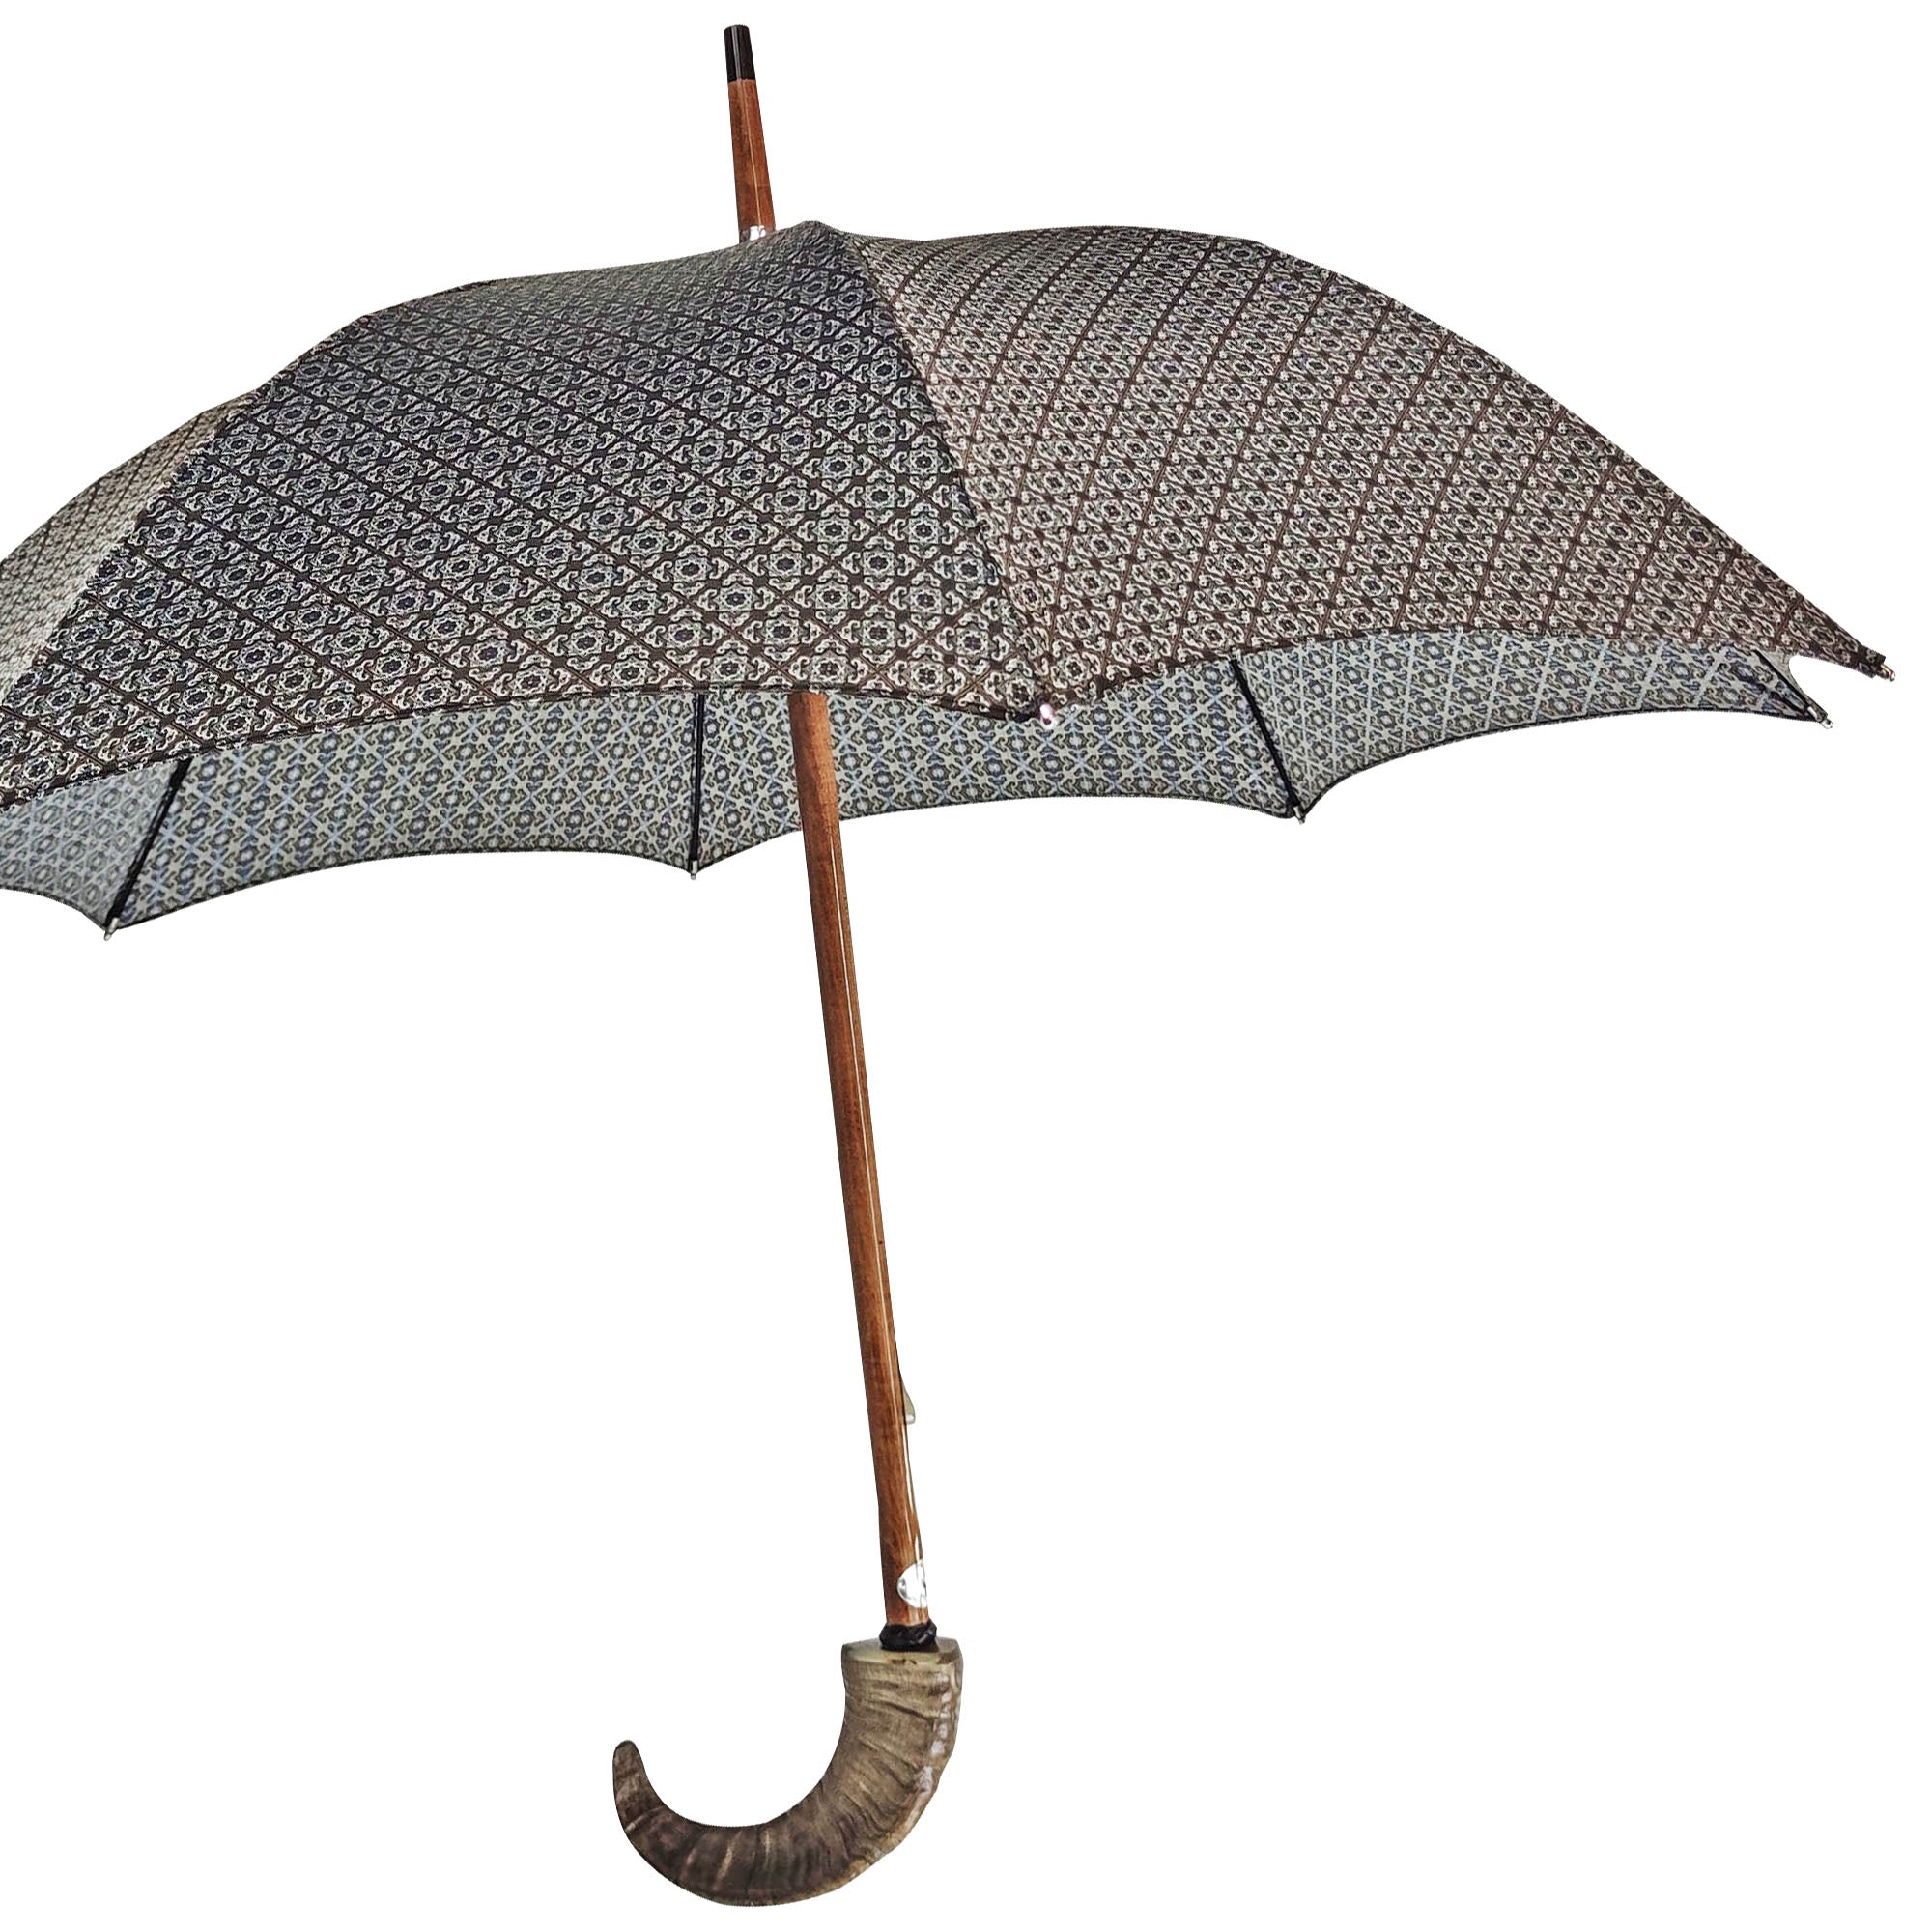 Umbrella with Ram's horn